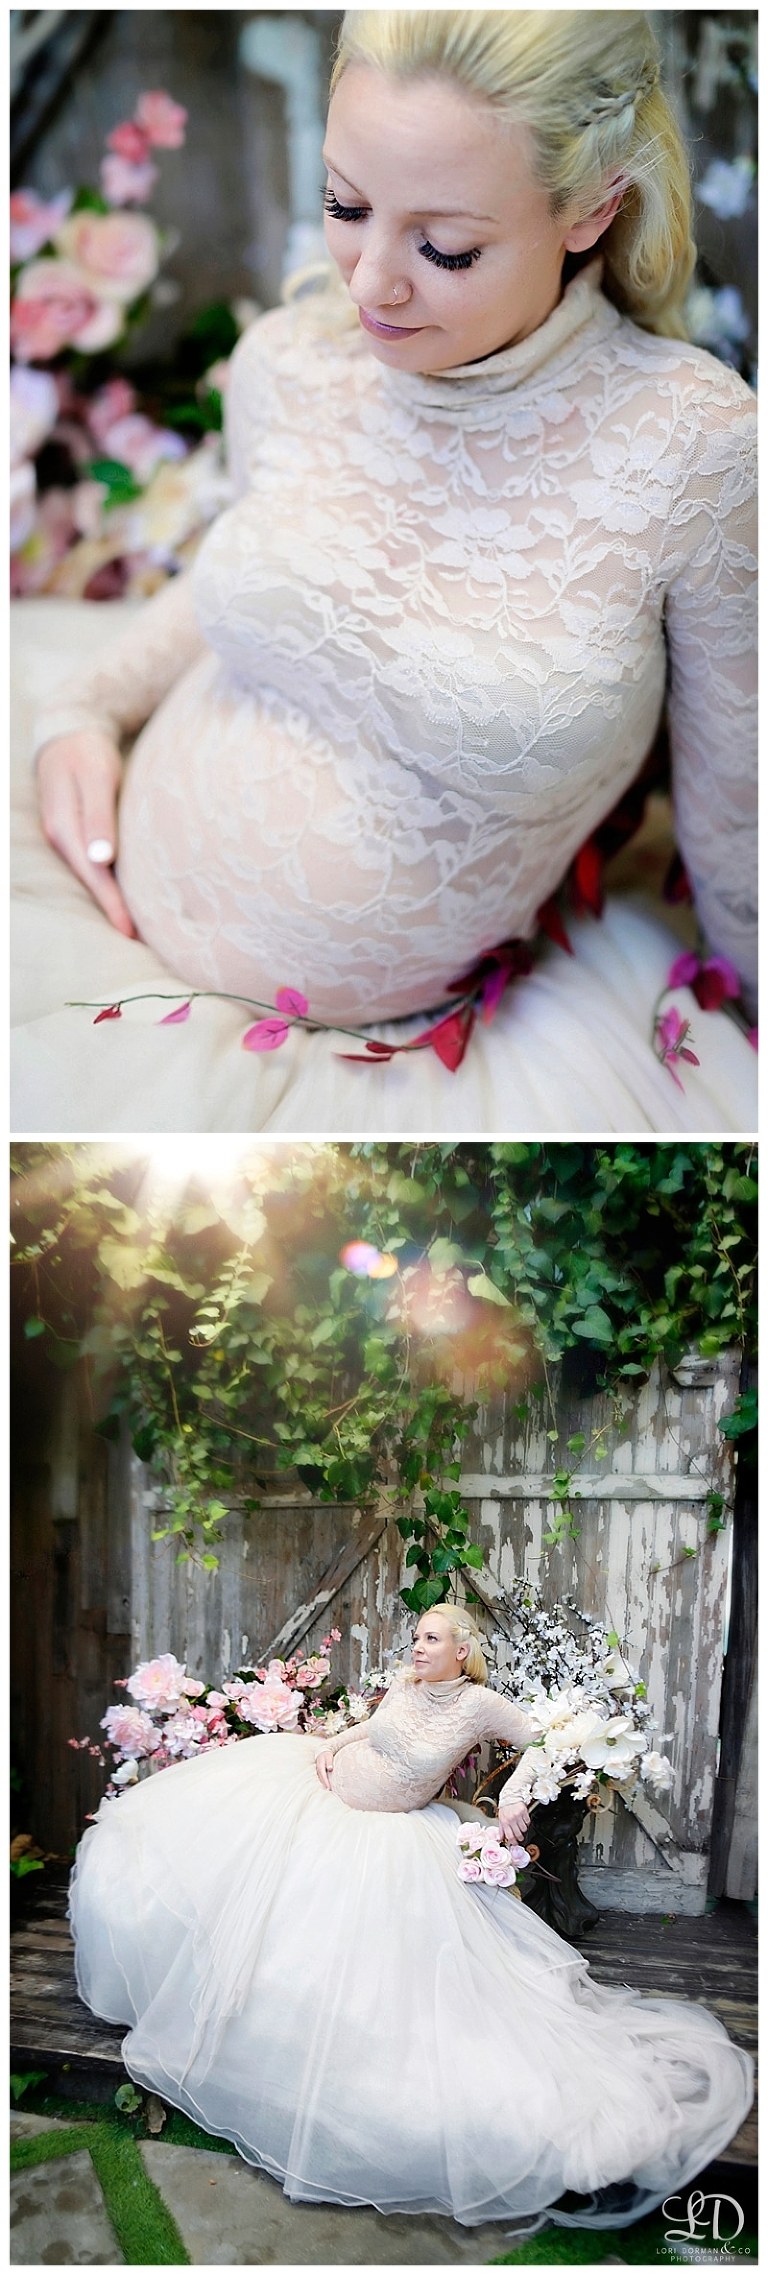 sweet maternity photoshoot-lori dorman photography-maternity boudoir-professional photographer_4094.jpg